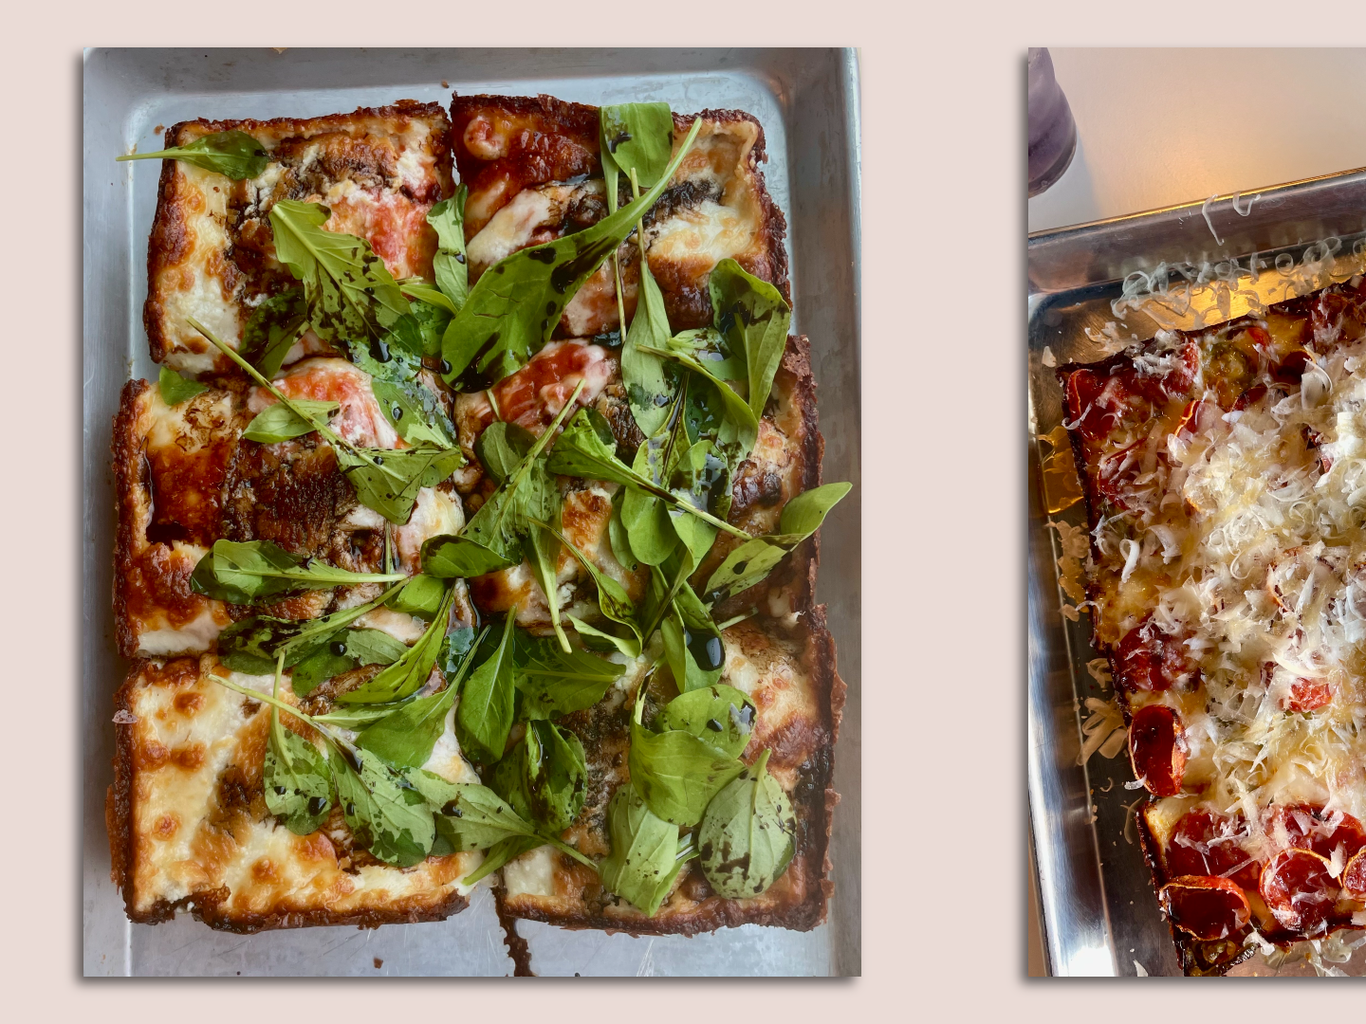 Minneapolis' Wrecktangle Pizza wins Good Morning America's best 